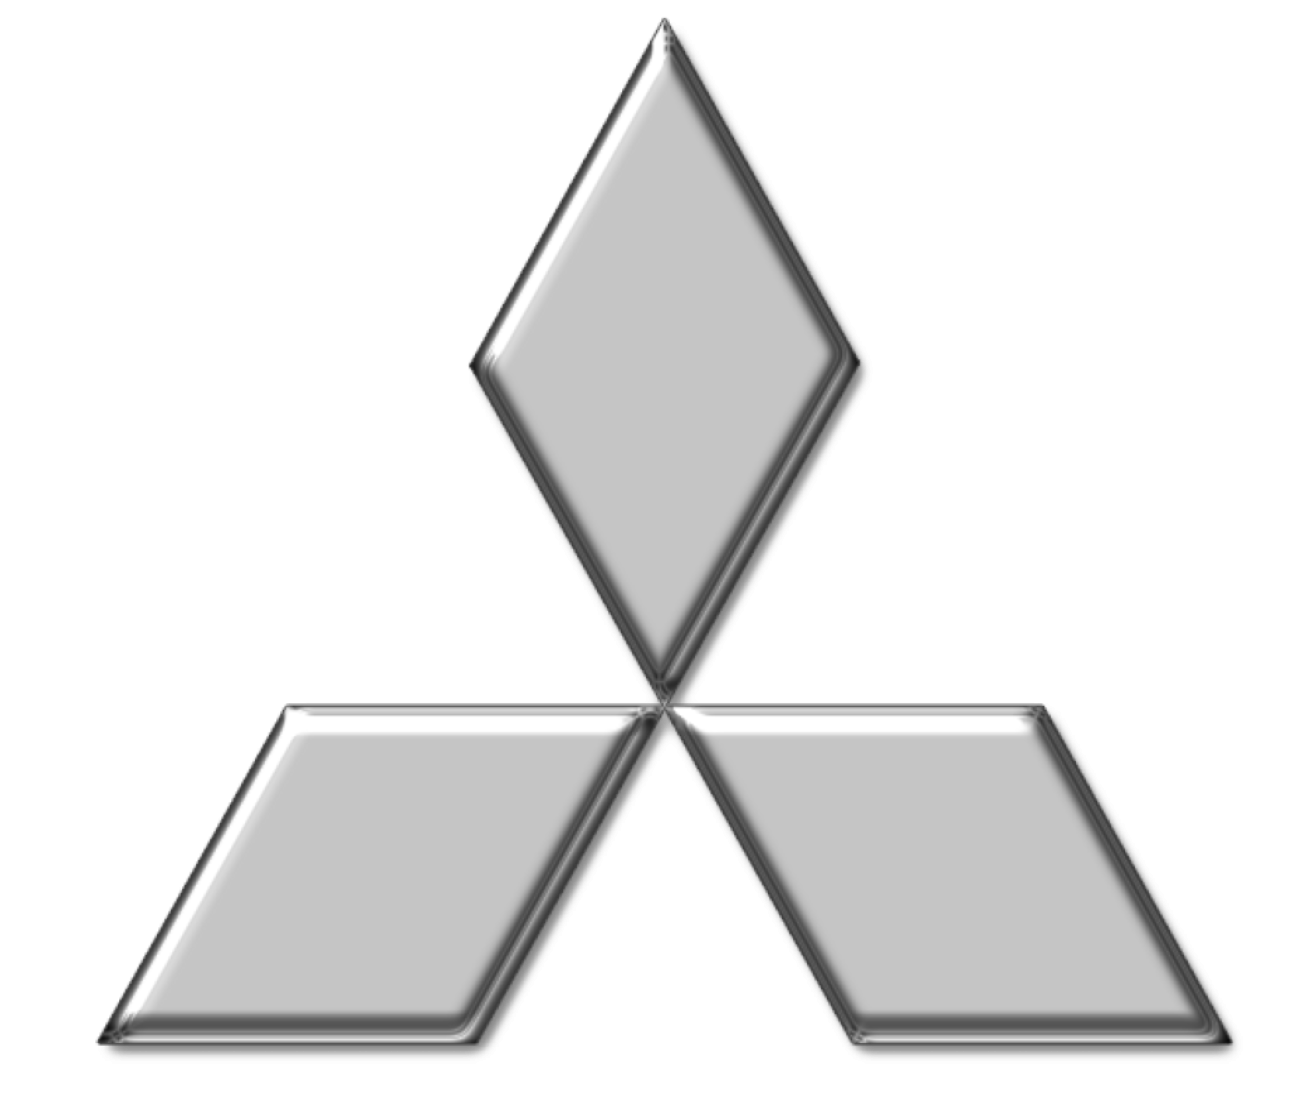 Логотип mitsubishi. Три Ромбика марка Митсубиси. Мицубиси лого. Митсубиши значок. Эмблема Митсубиси 9.